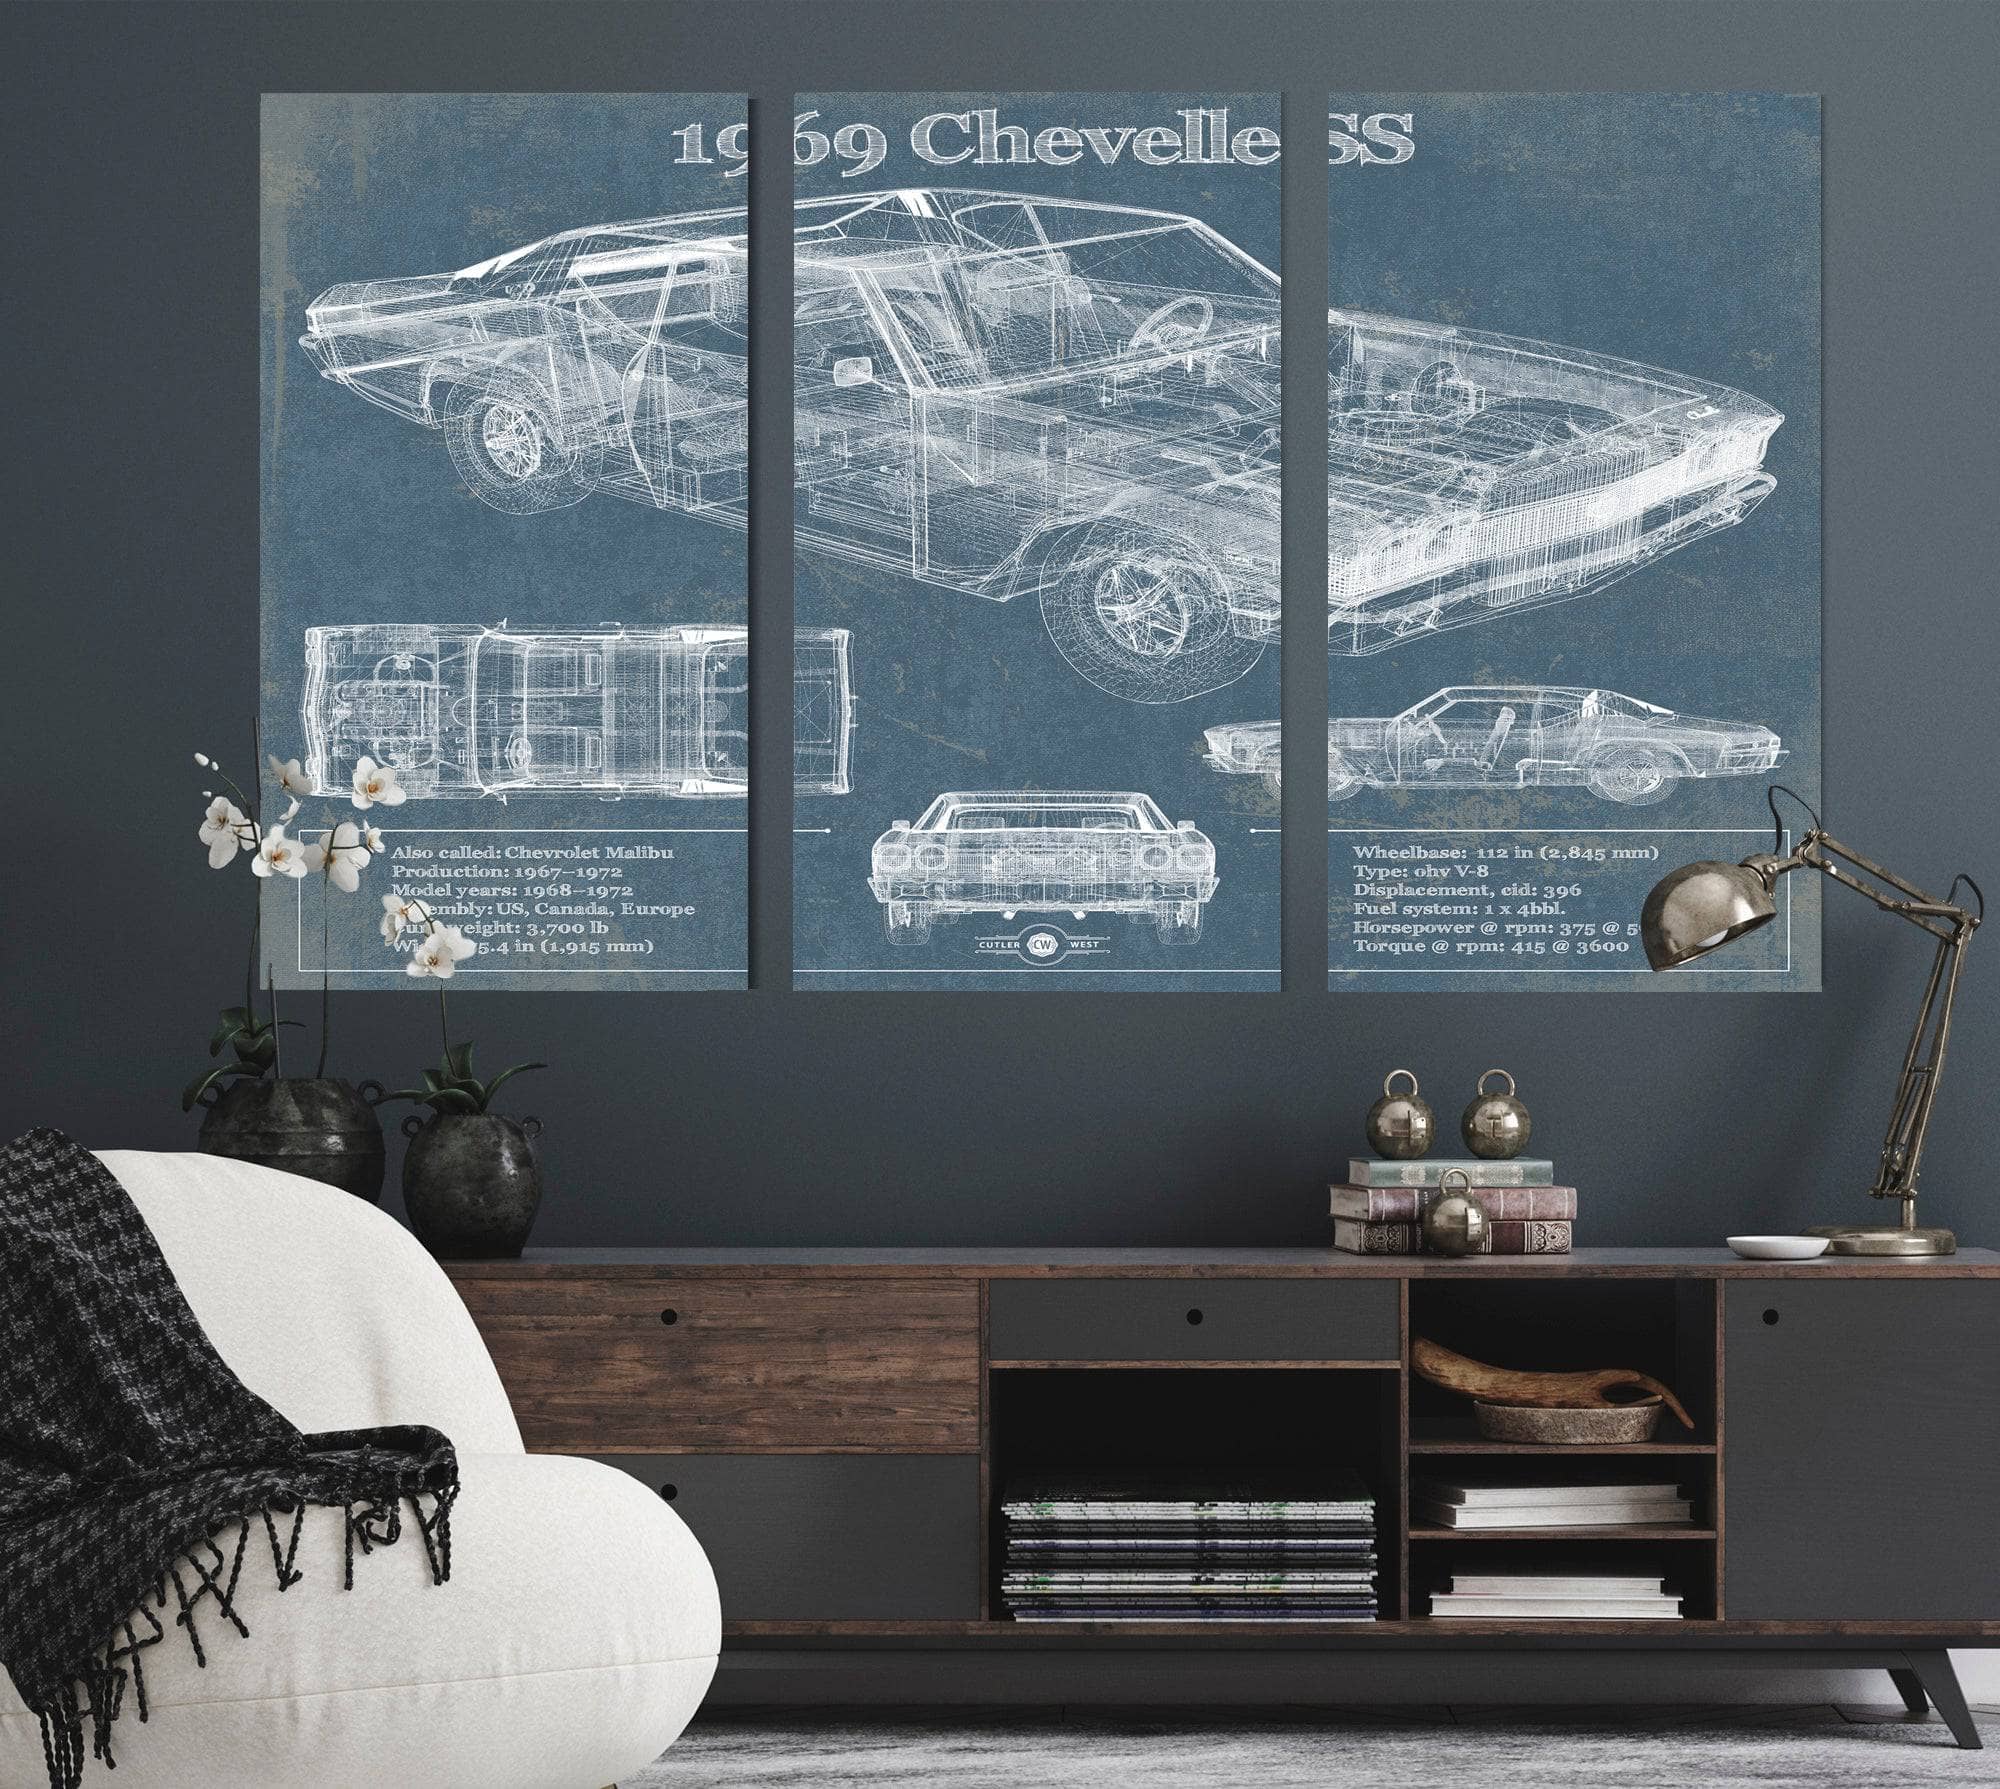 1969 Chevrolet Chevelle SS Original Blueprint Art